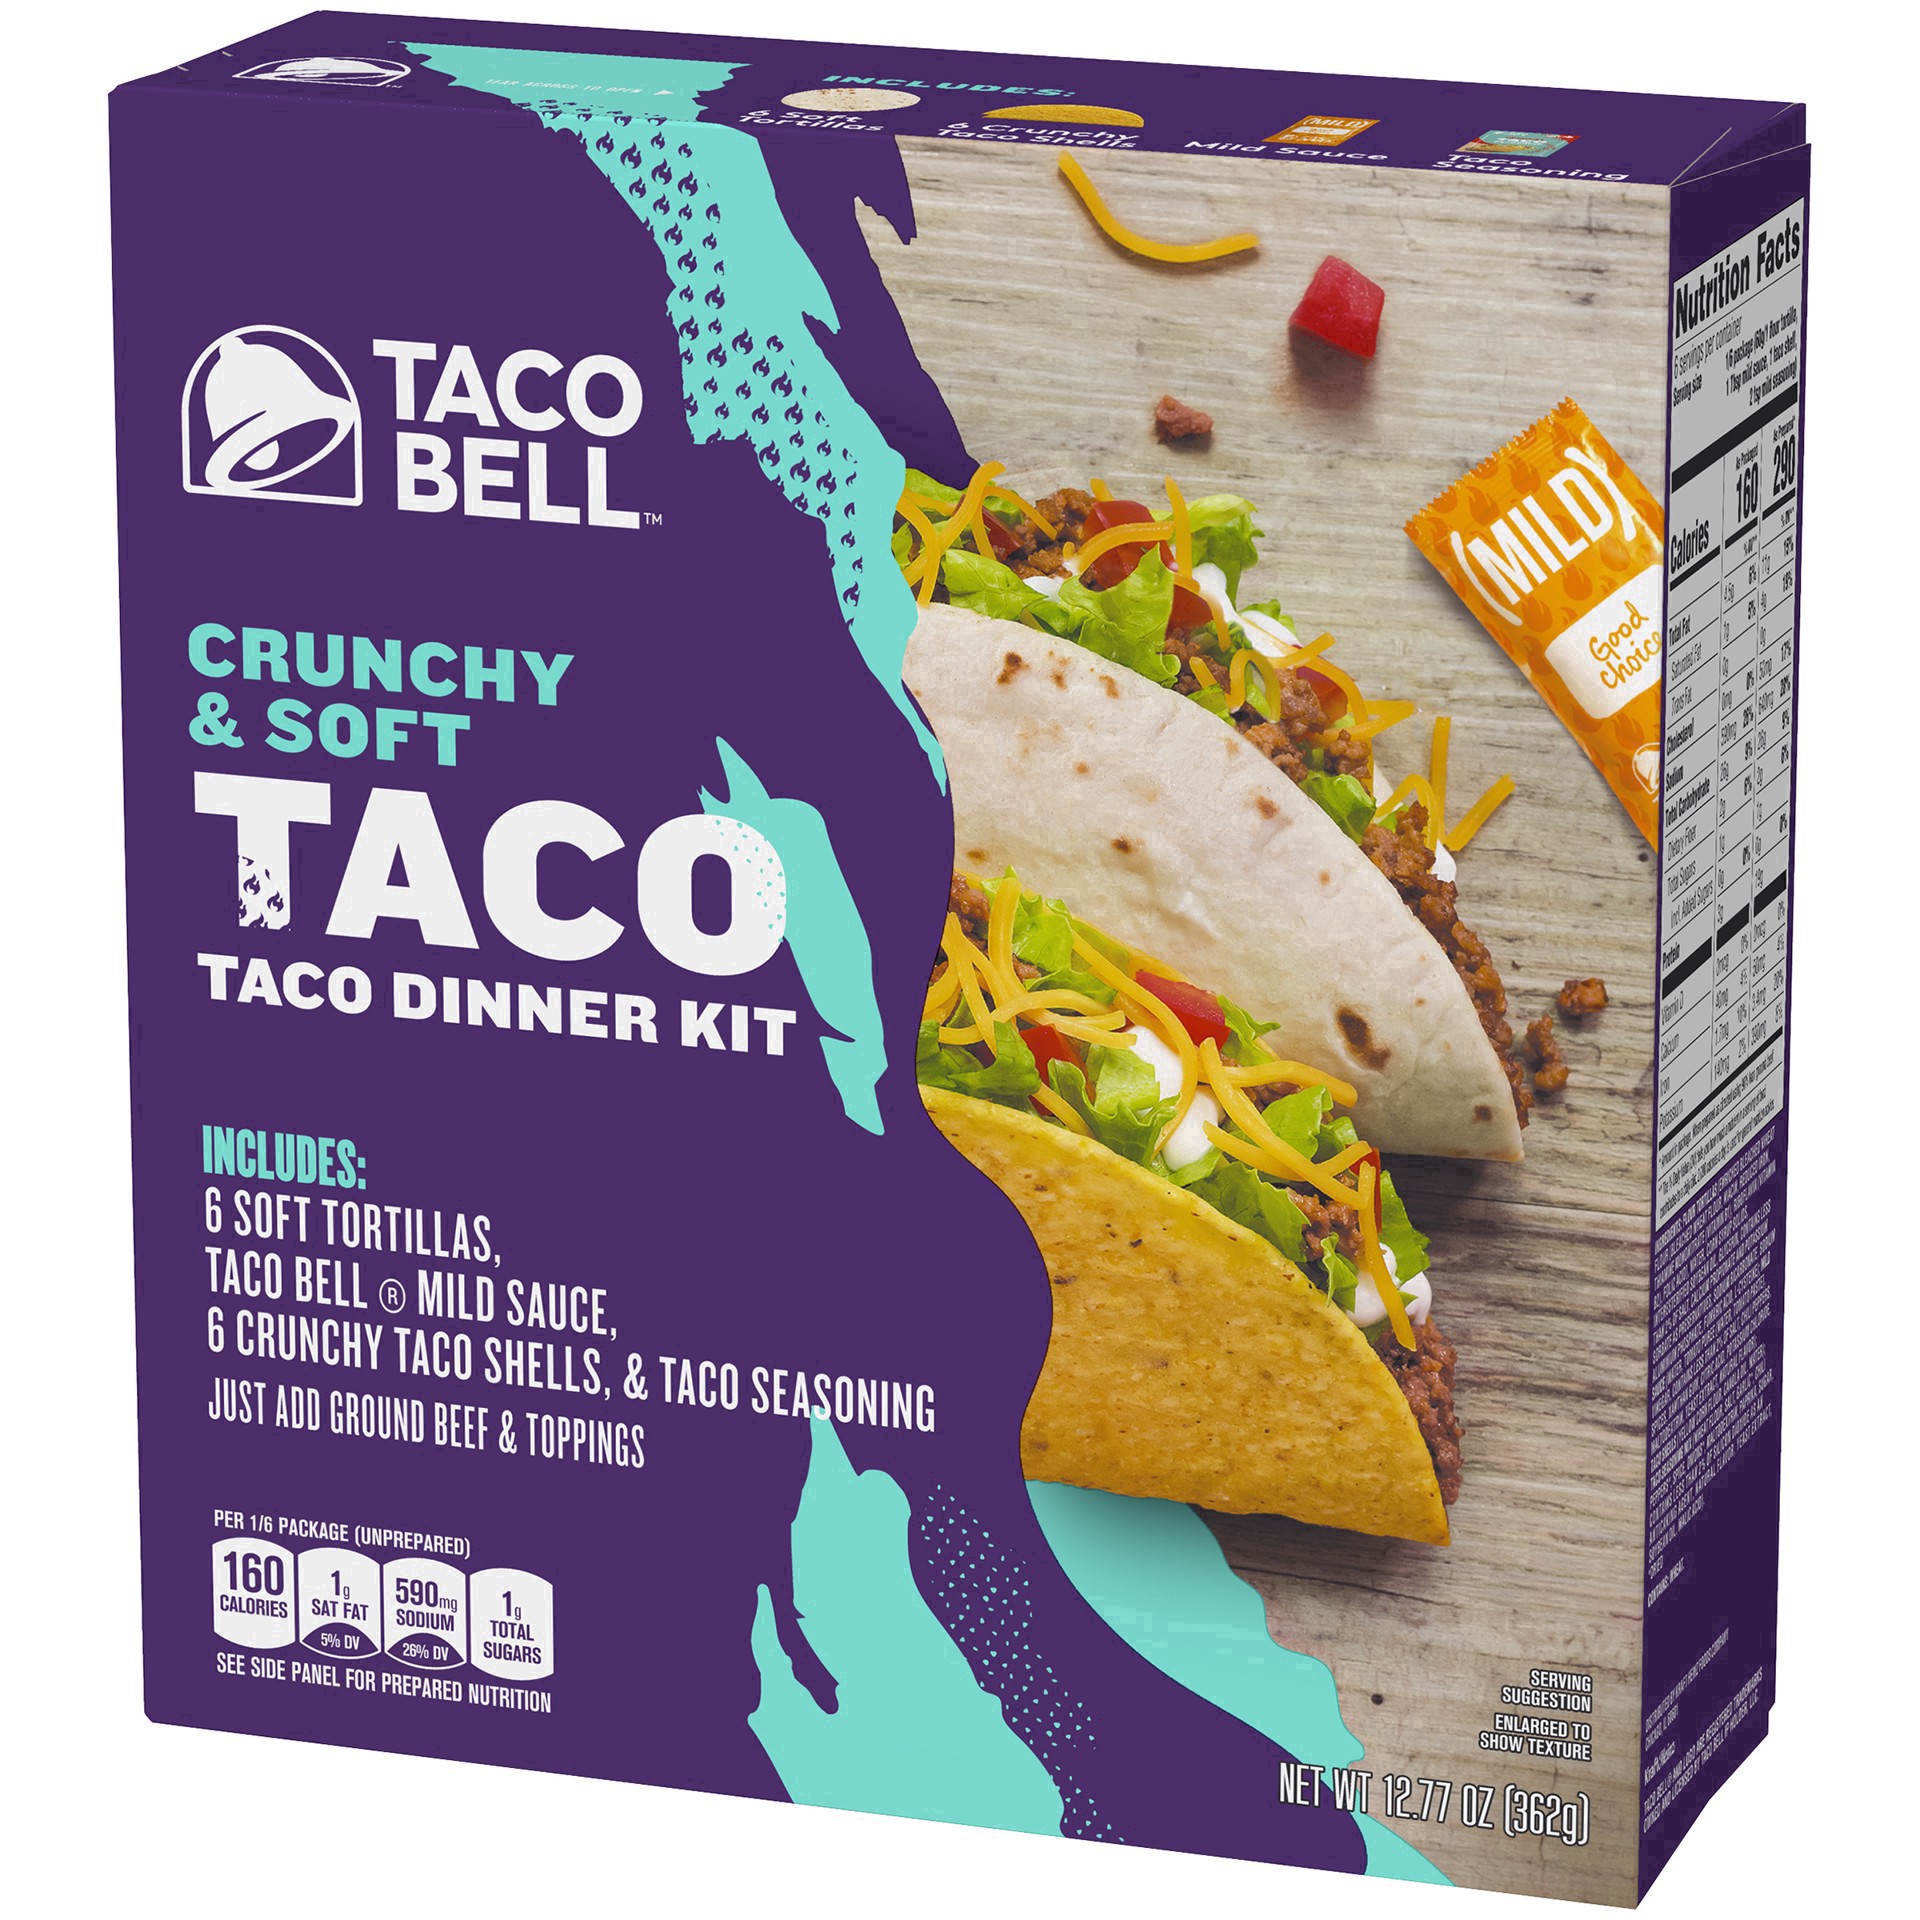 slide 52 of 101, Taco Bell Crunchy & Soft Taco Cravings Kit with 6 Soft Tortillas, 6 Crunchy Taco Shells, Taco Bell Mild Sauce & Seasoning, 12.77 oz Box, 1 ct